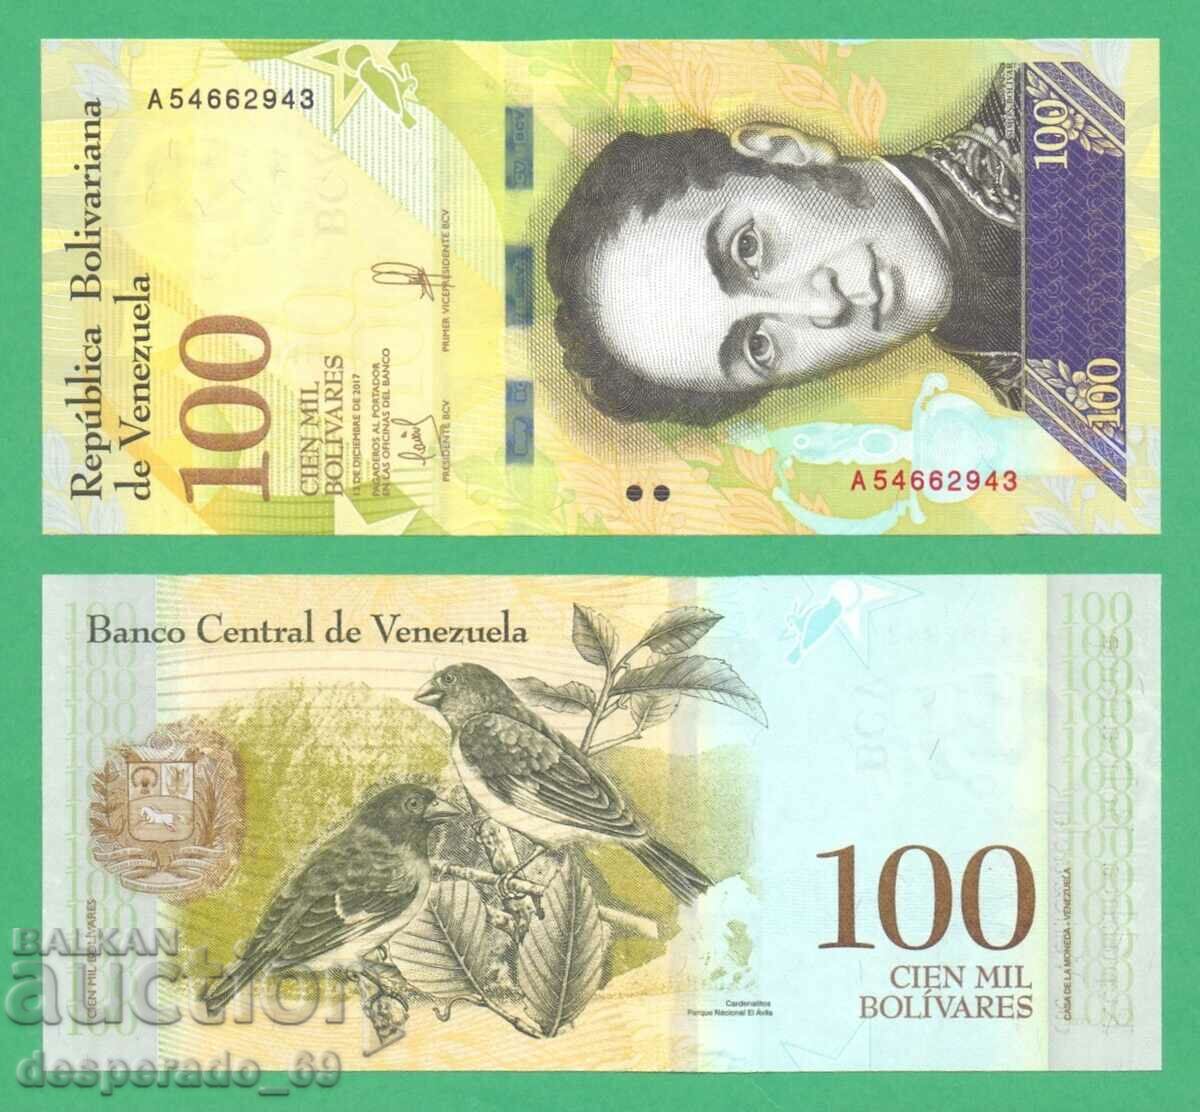 (¯`'•.¸ VENEZUELA 100,000 Bolivar 2017 UNC ¸.•'´¯)